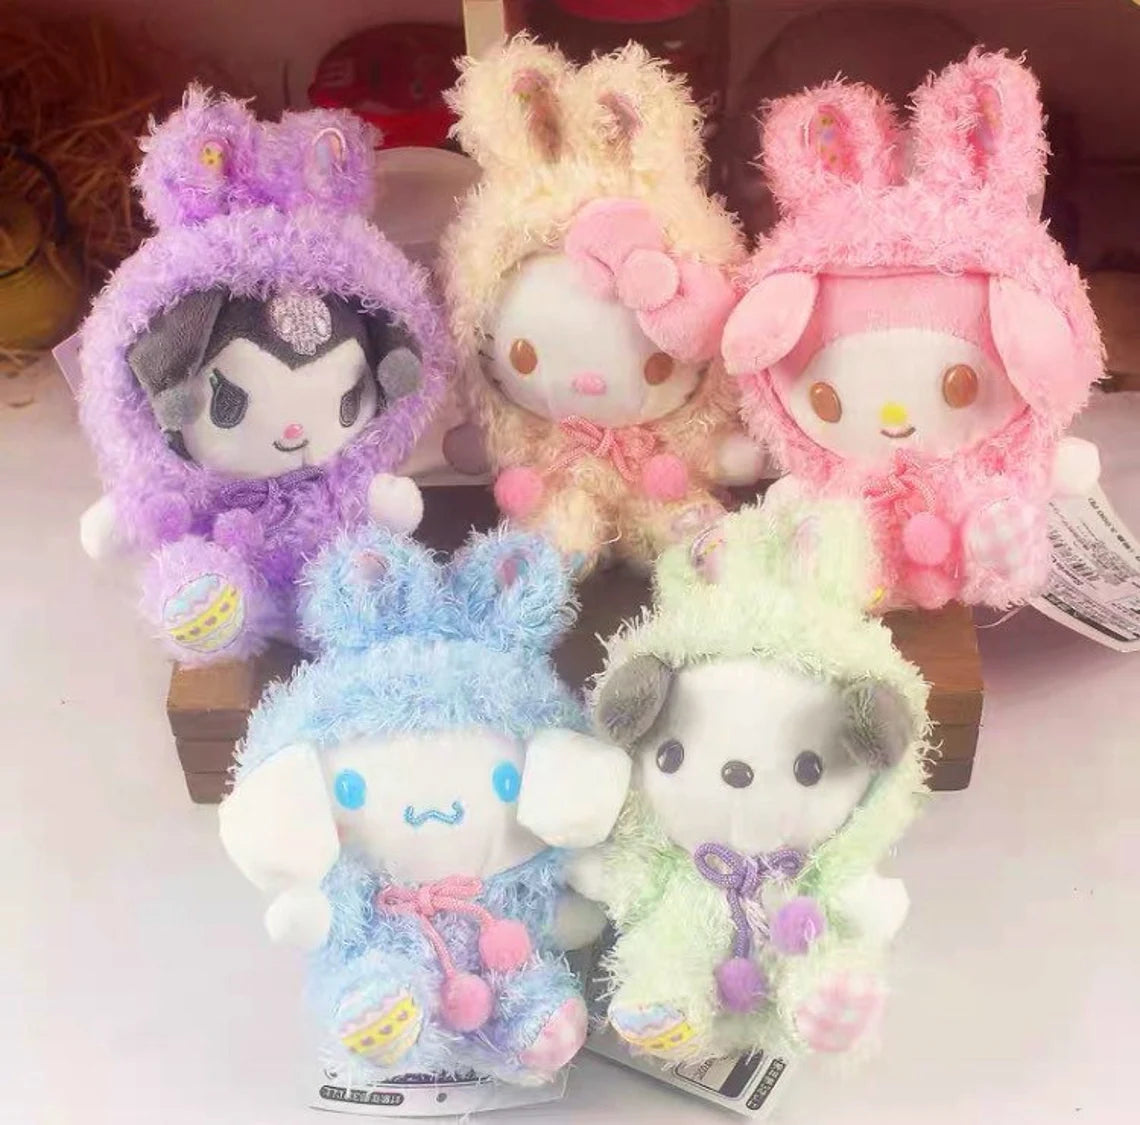 Sanrio Easter Rabbit Pochacco Mint Plush Doll & Mini Plush Doll Keychain